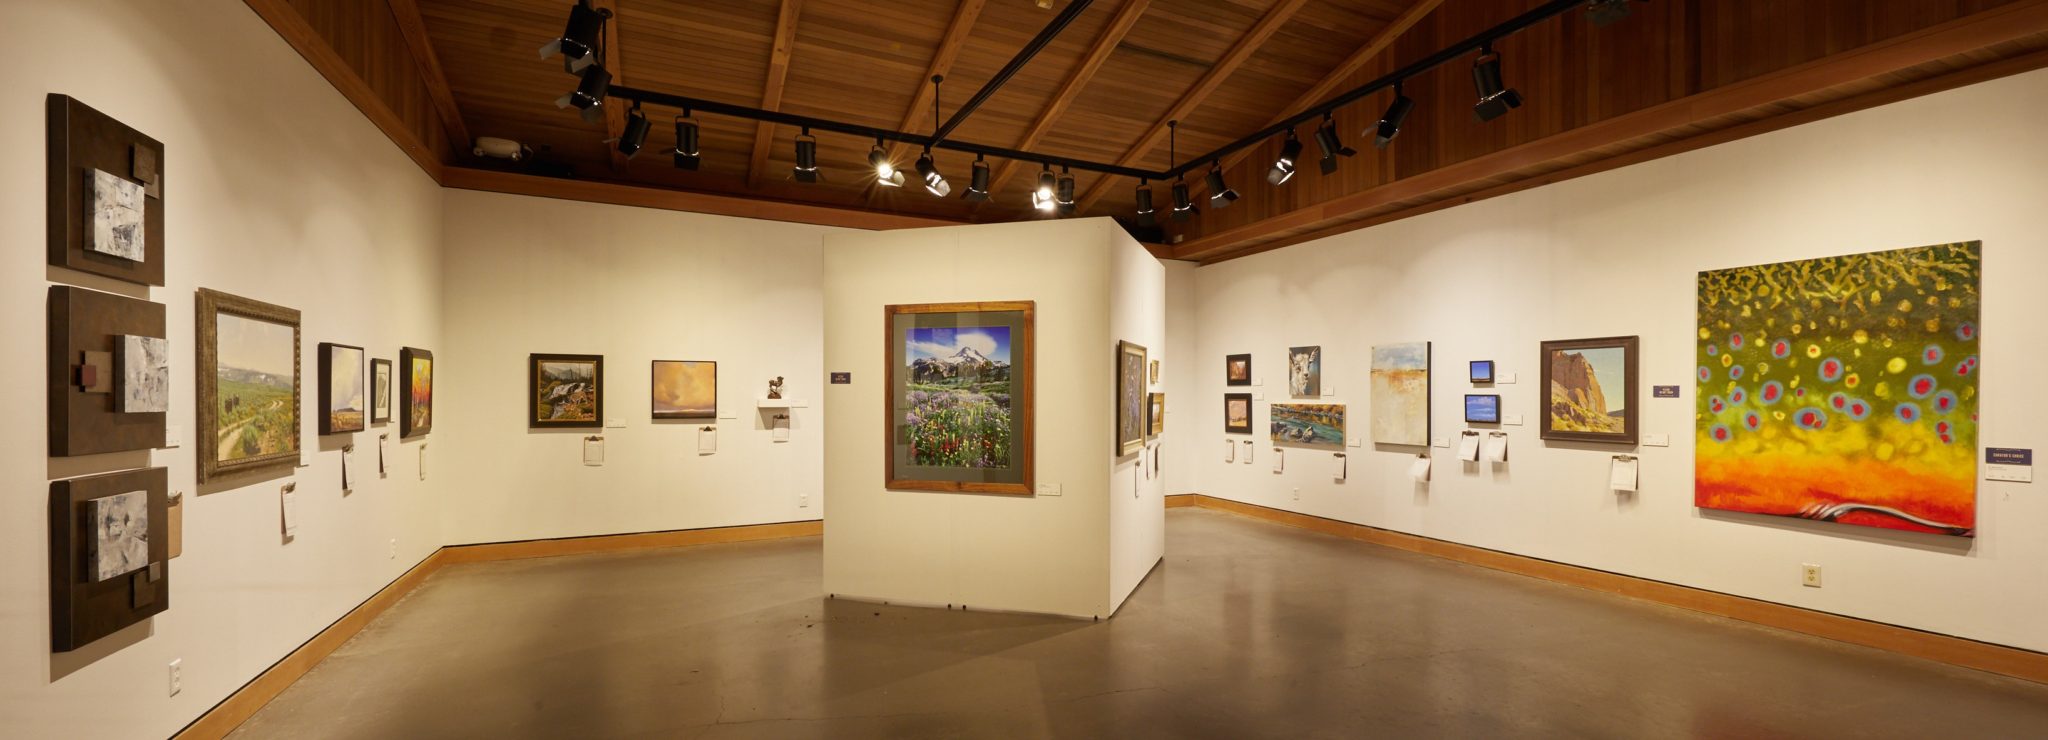 gallery_crop - High Desert Museum